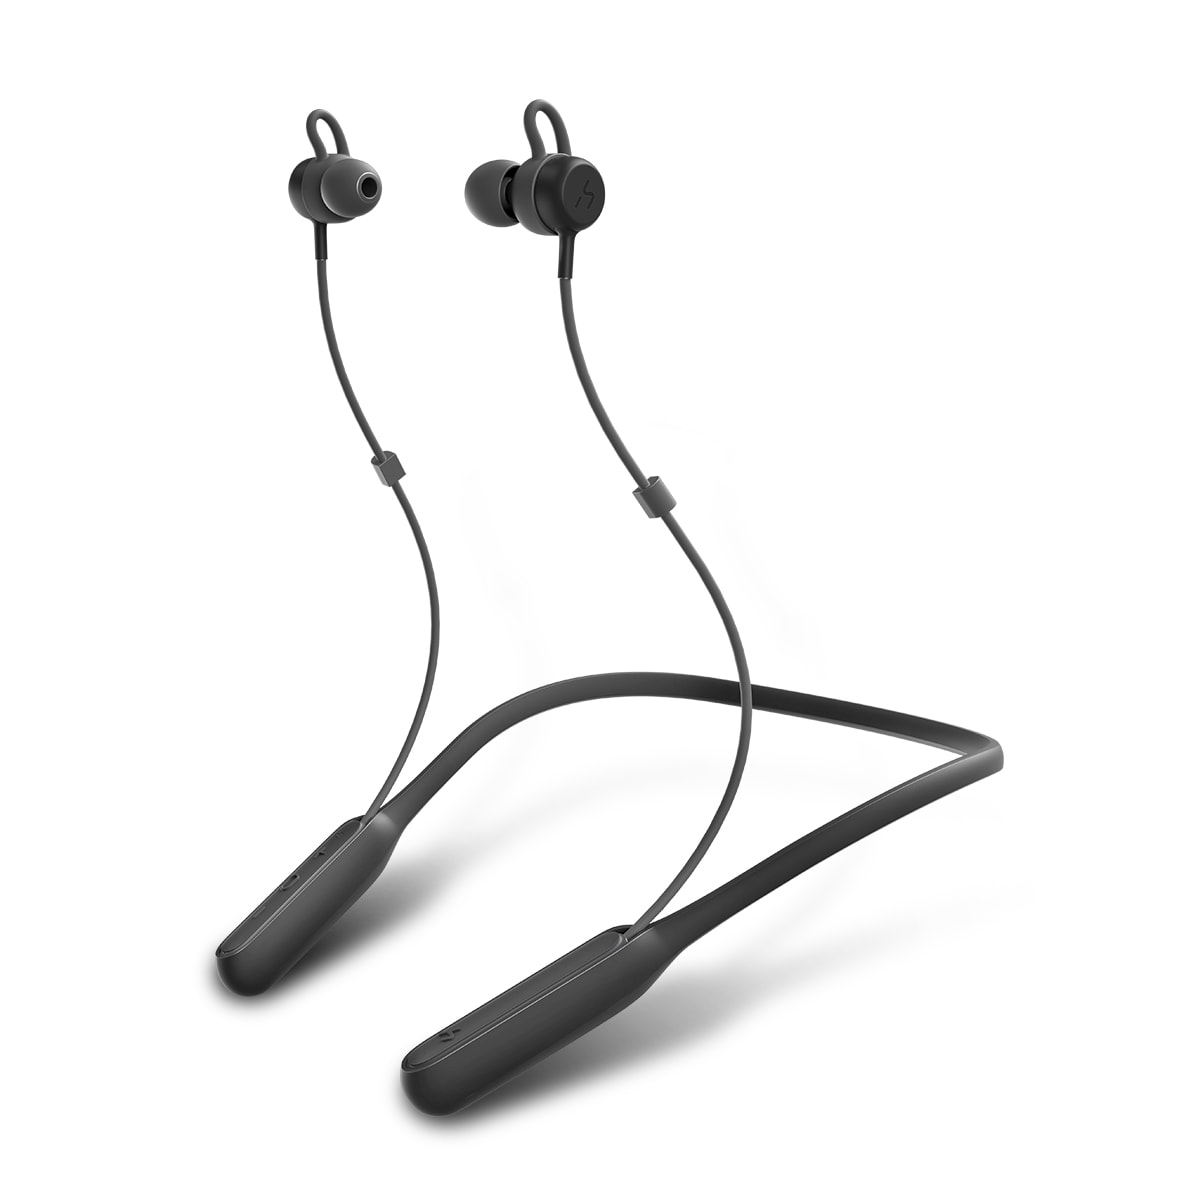 HAVIT Upaya Noise Cancelling Earbuds with IPX5 Waterproof